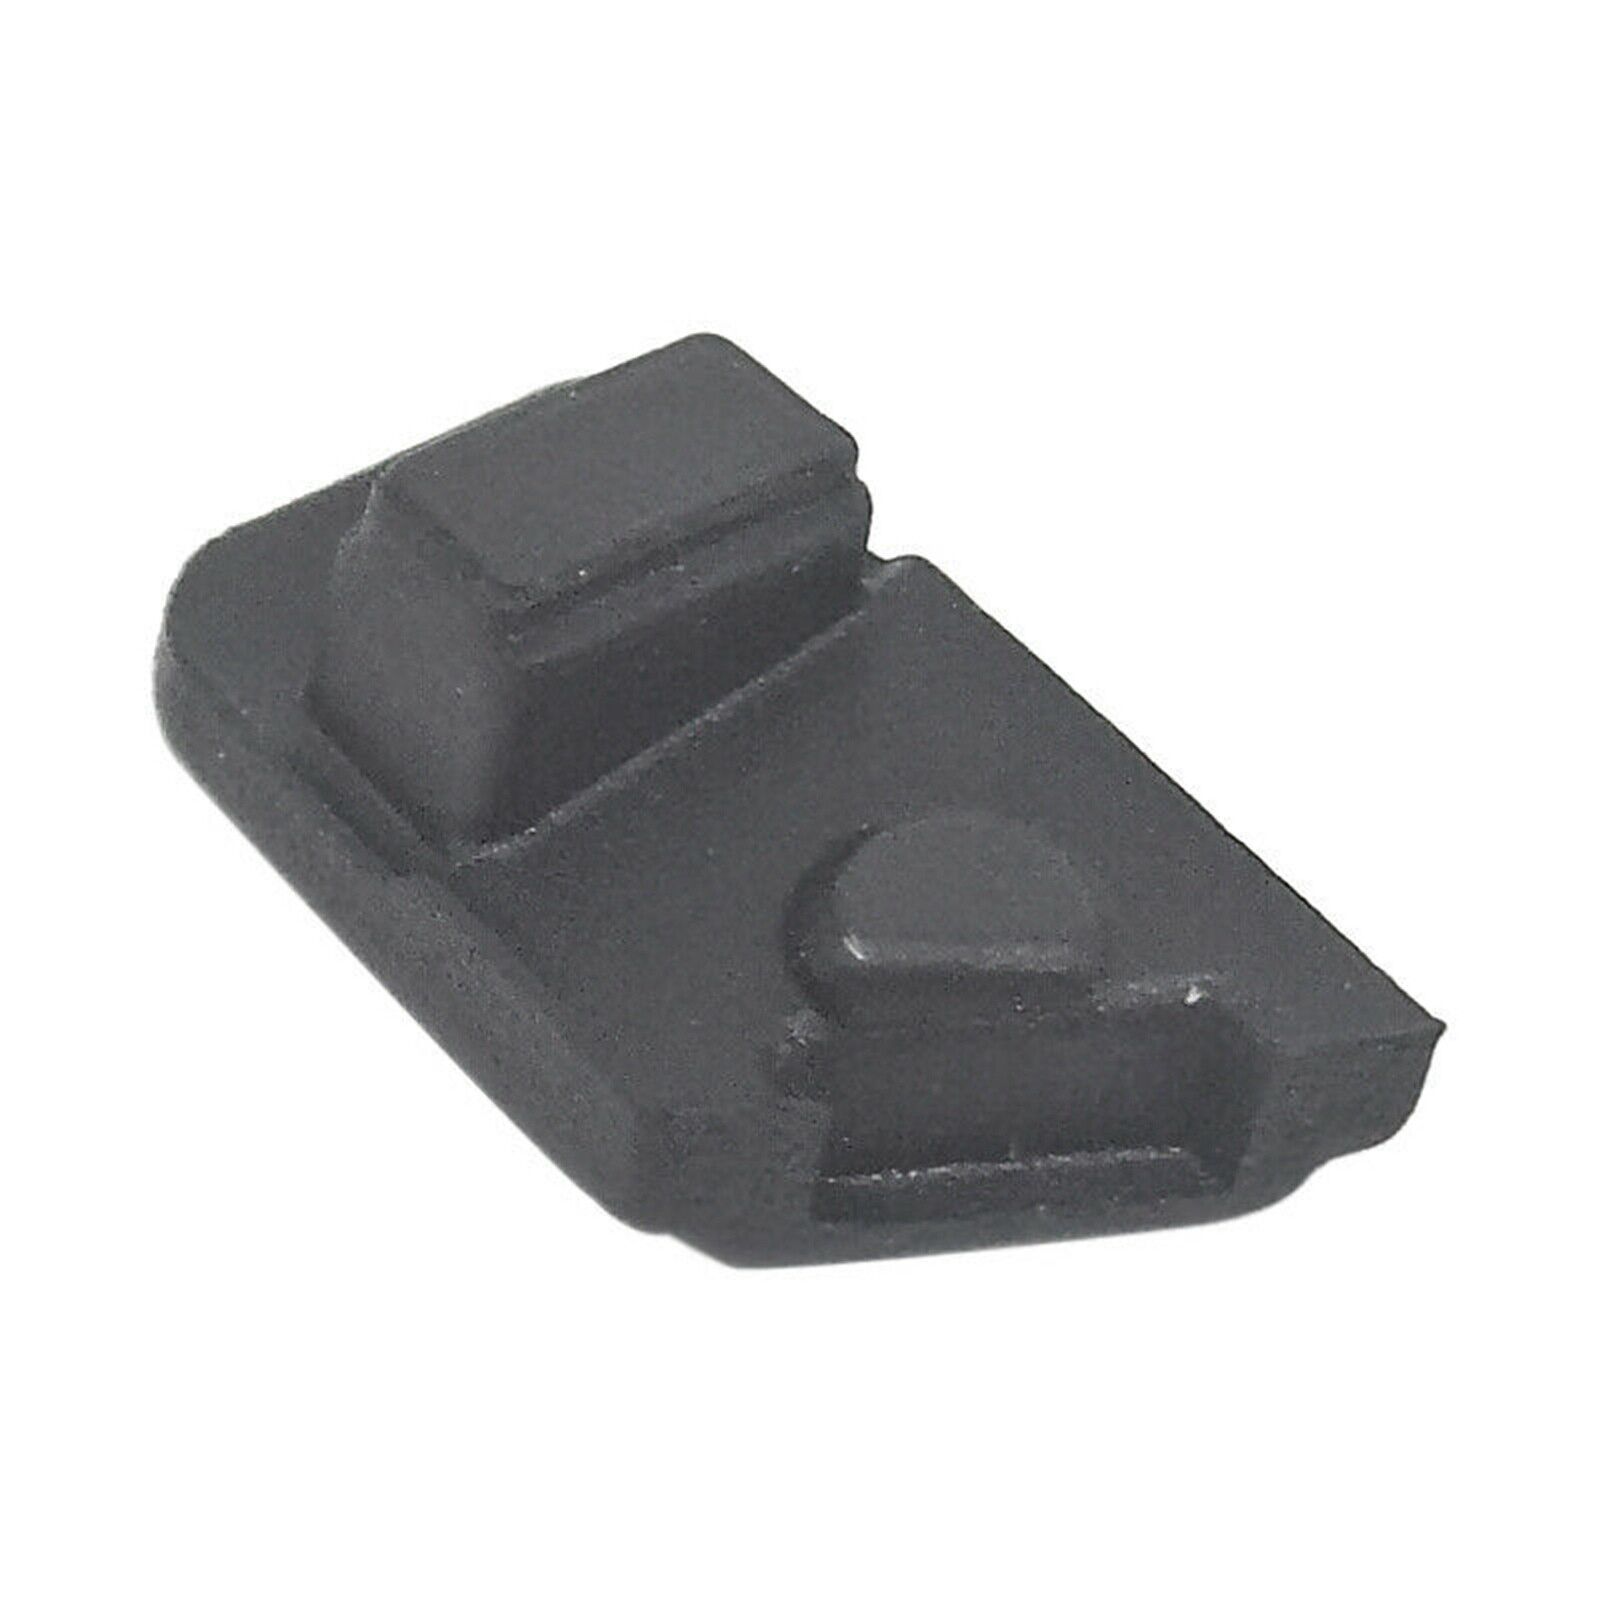 Thumb Cap for Razer Basilisk Ultimate / Razer Basilisk X Hyperspeed